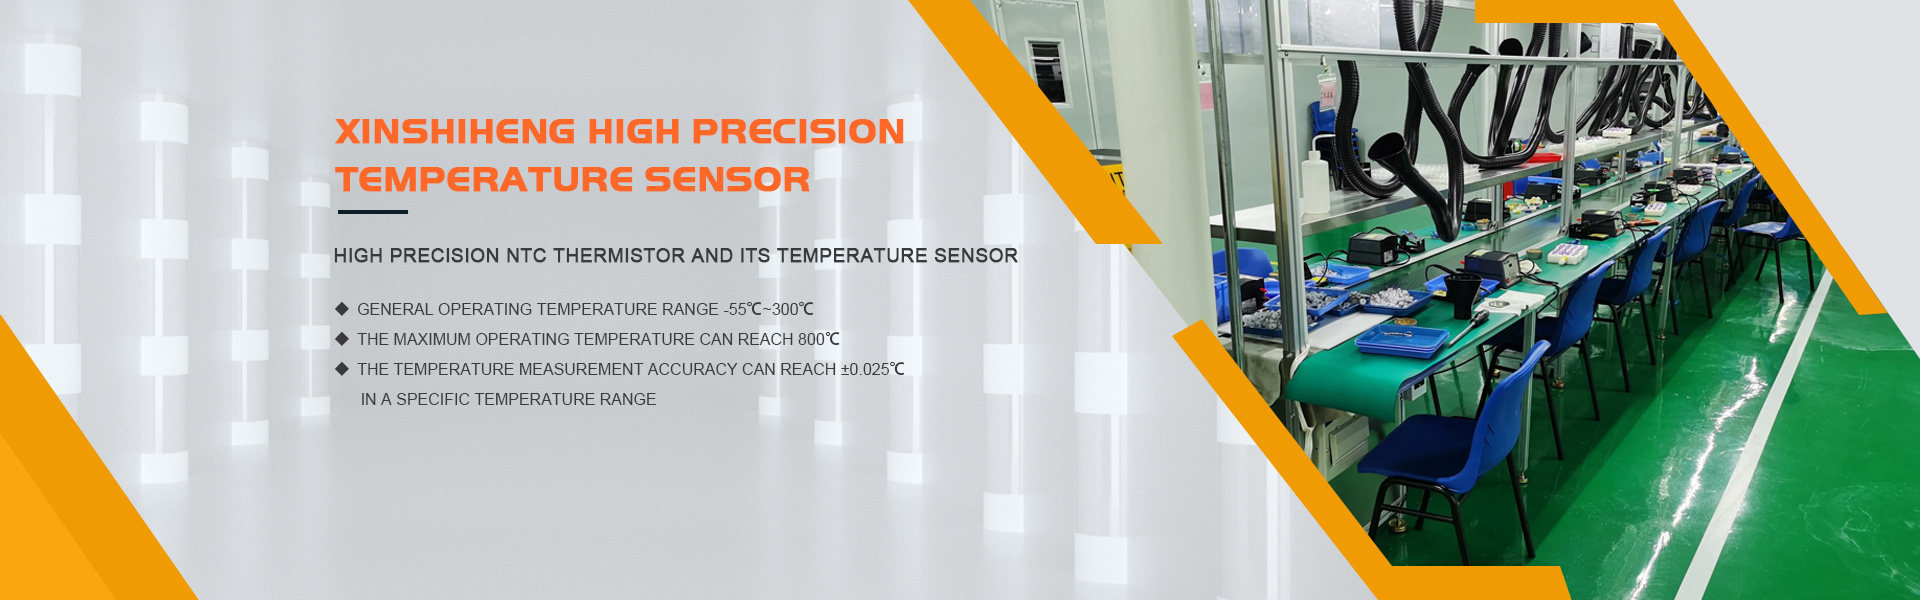 NTC thermistor fabrikant, temperatuursensor, hoge precisie,GUANGDONG XINSHIHENG TECHNOLOGY CO.,LTD